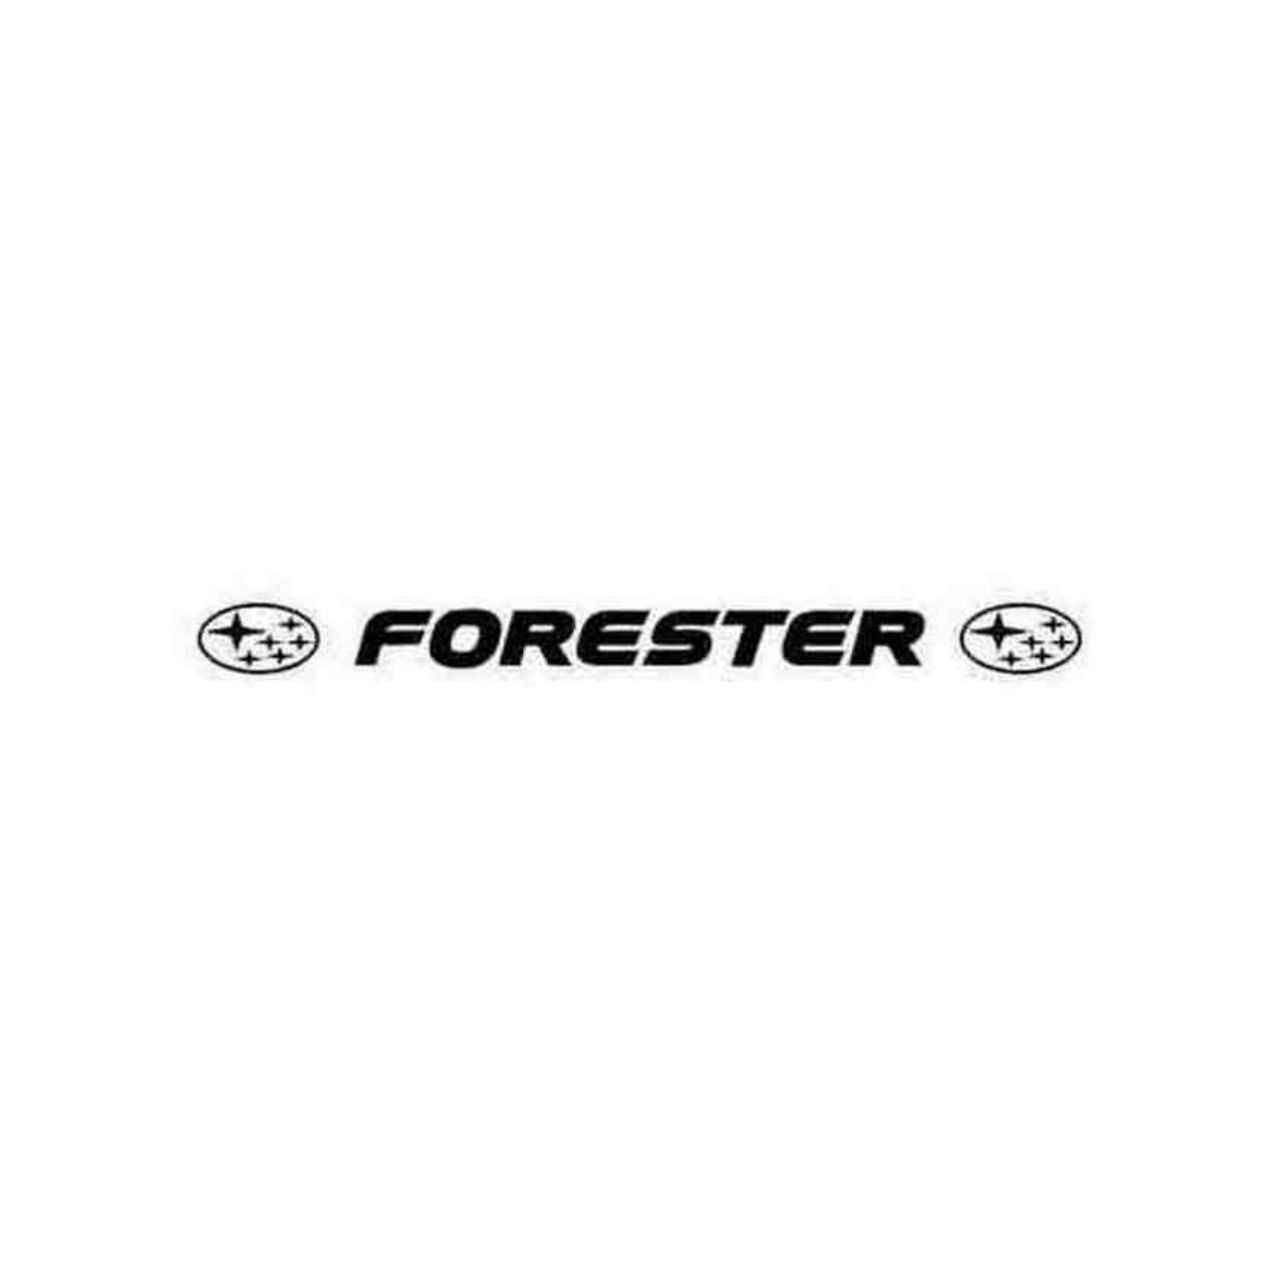 Forester Logo - Subaru Forester Name Amp Sunstrip Decal Sticker